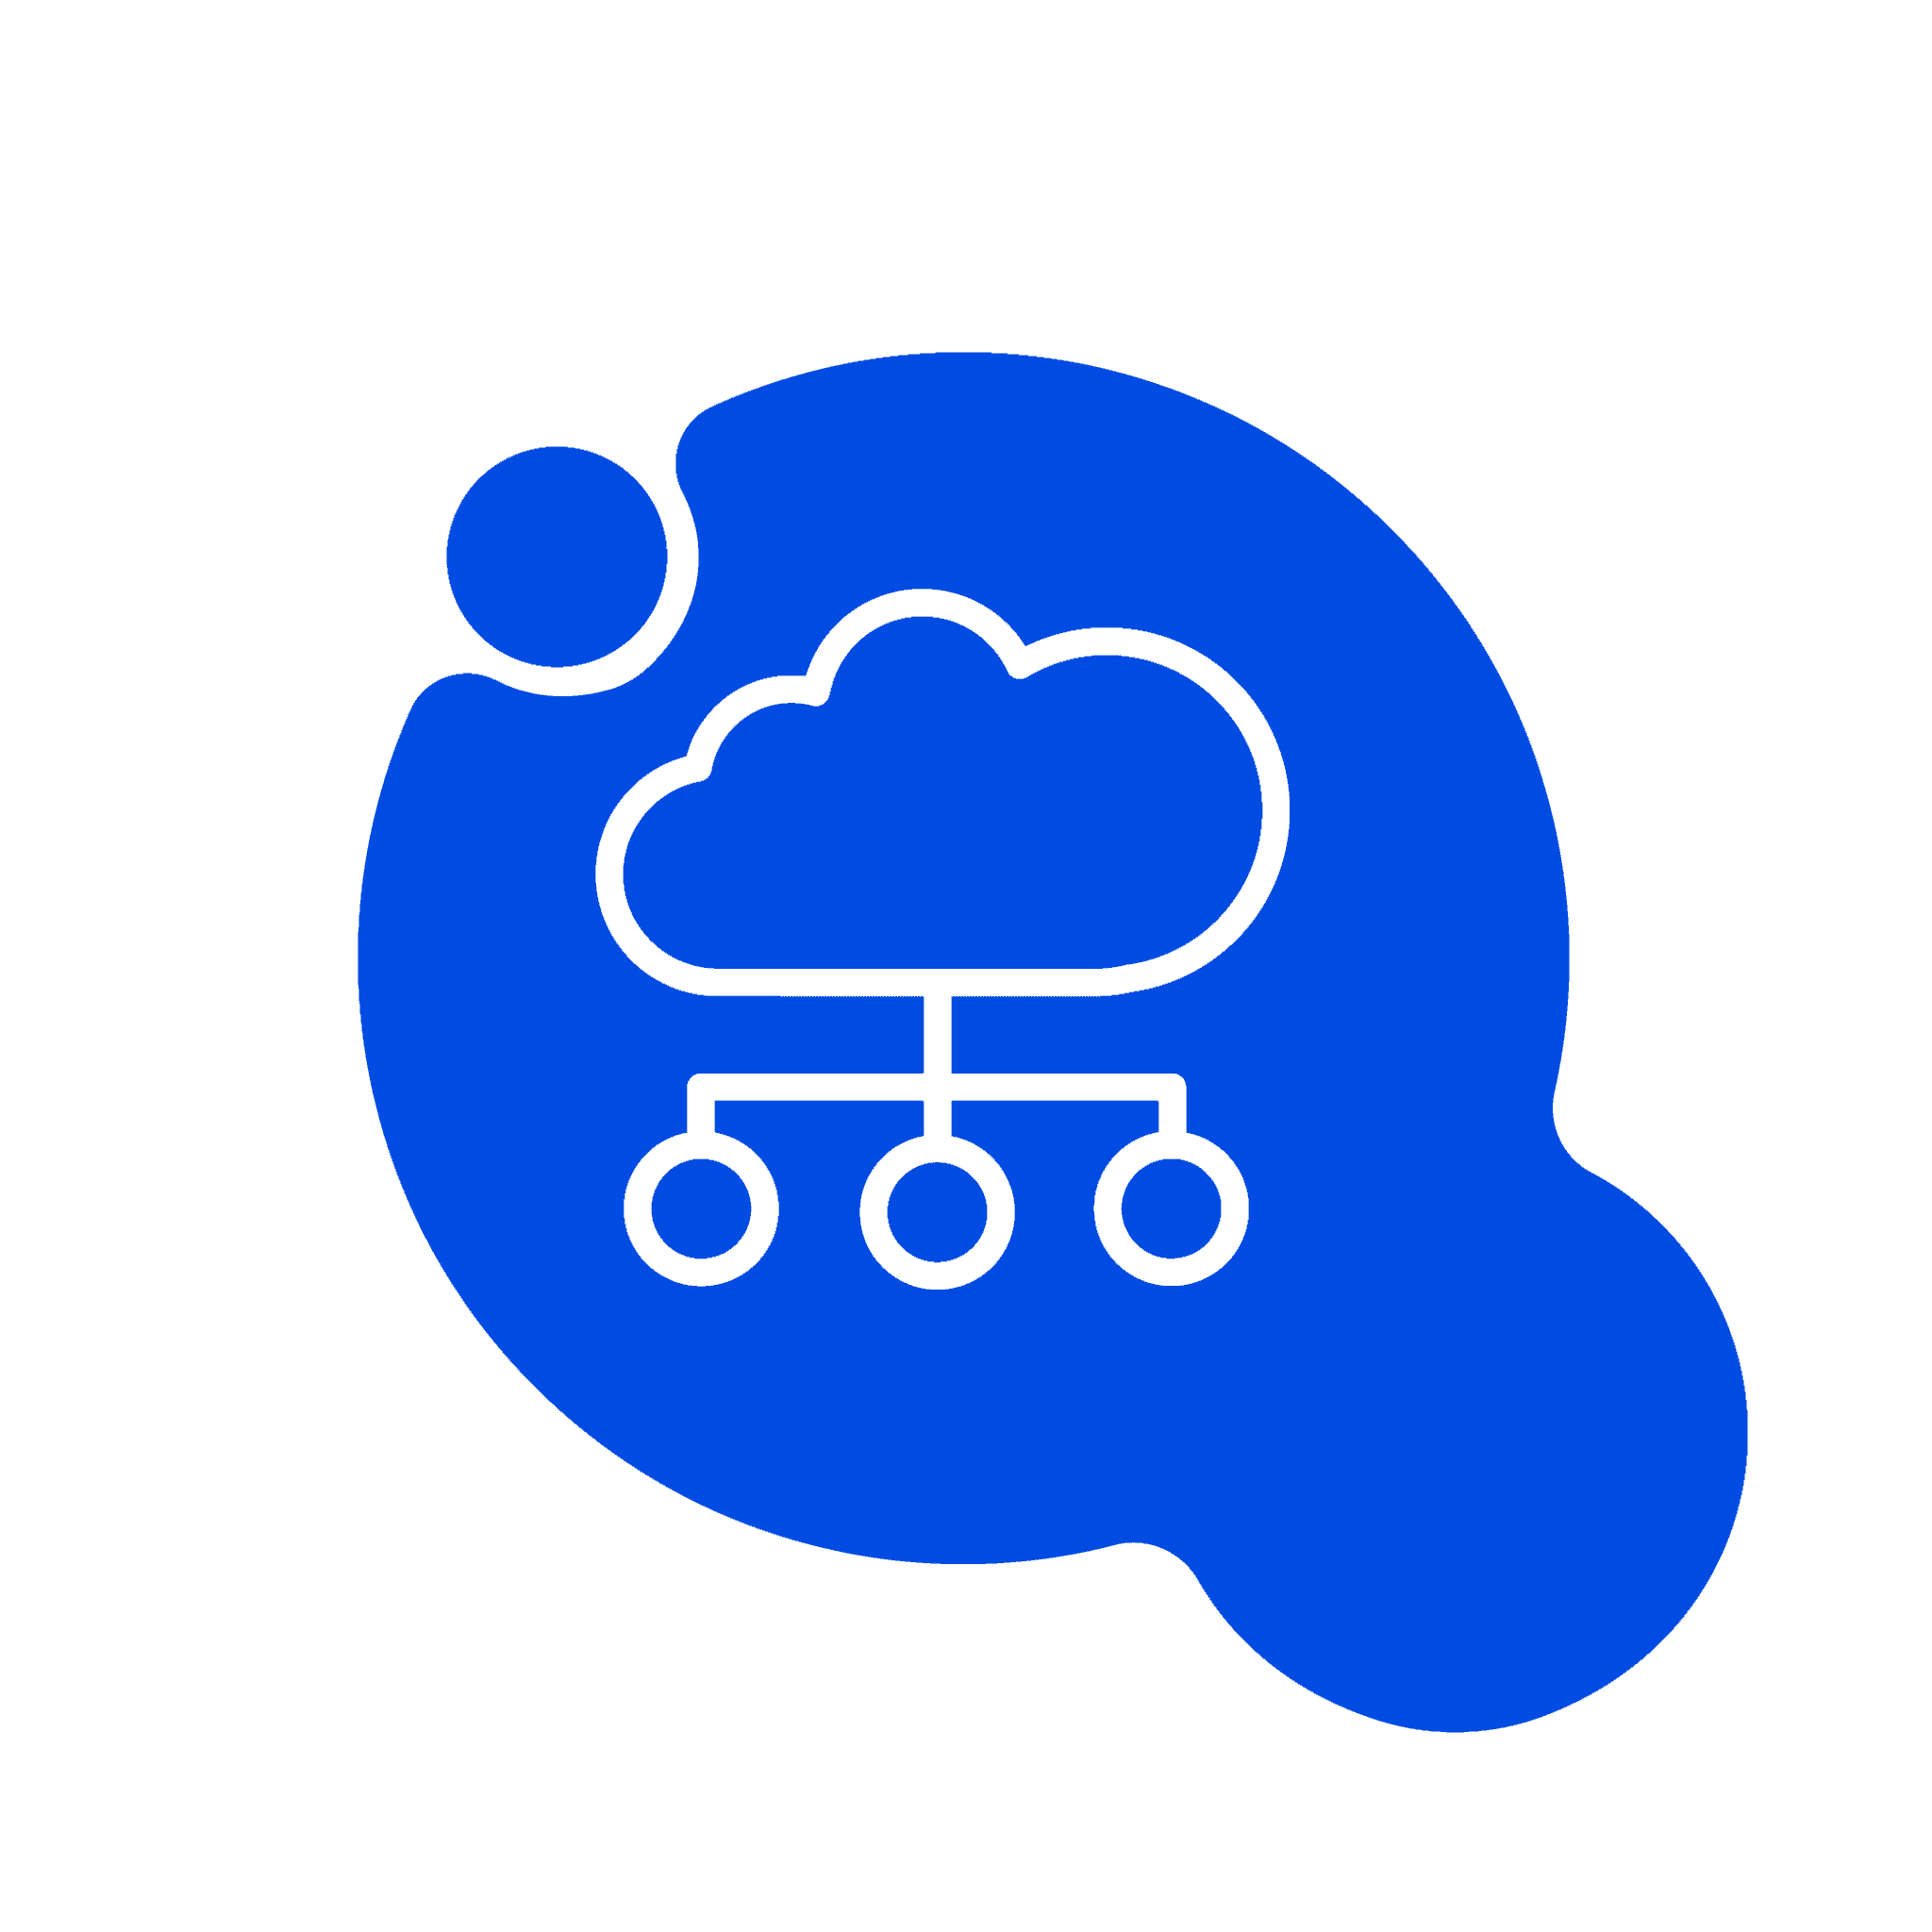 inclusio’s cloud platform